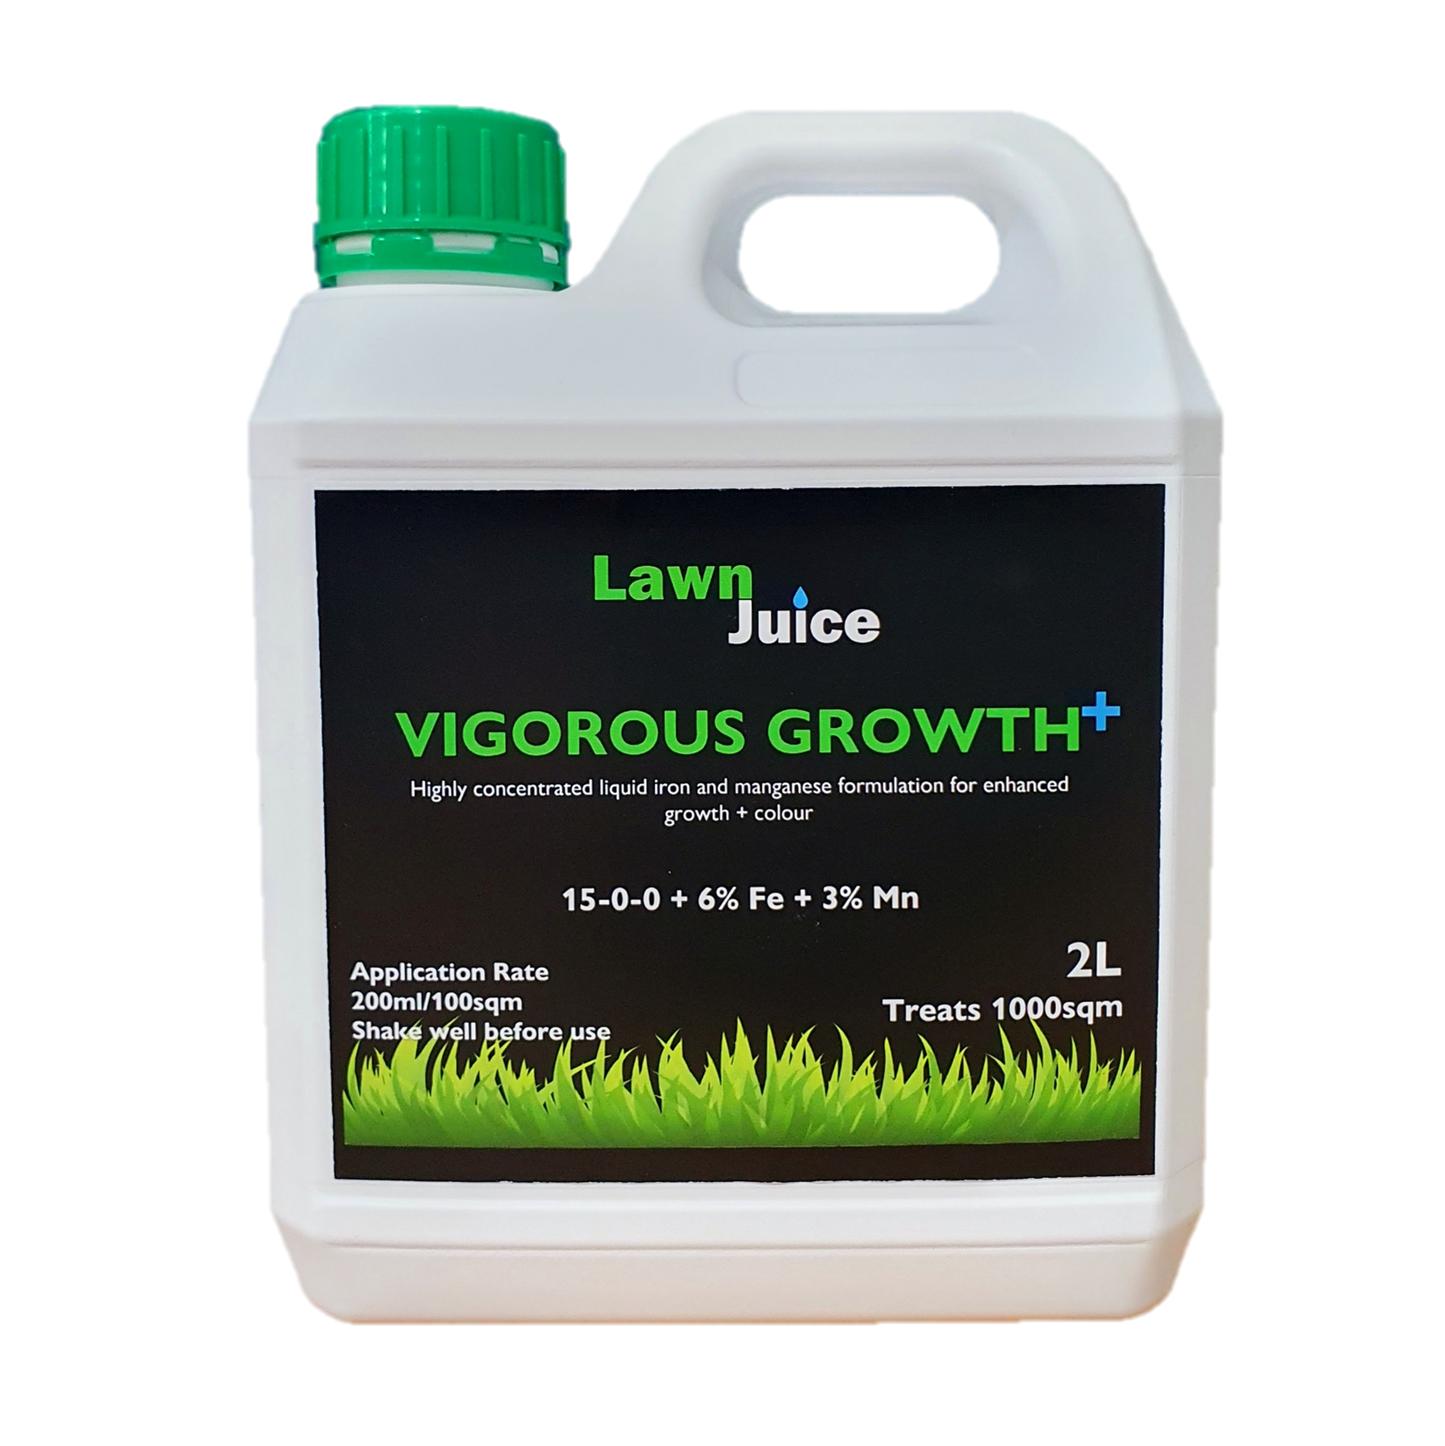 Lawn Juice Vigorous Growth+